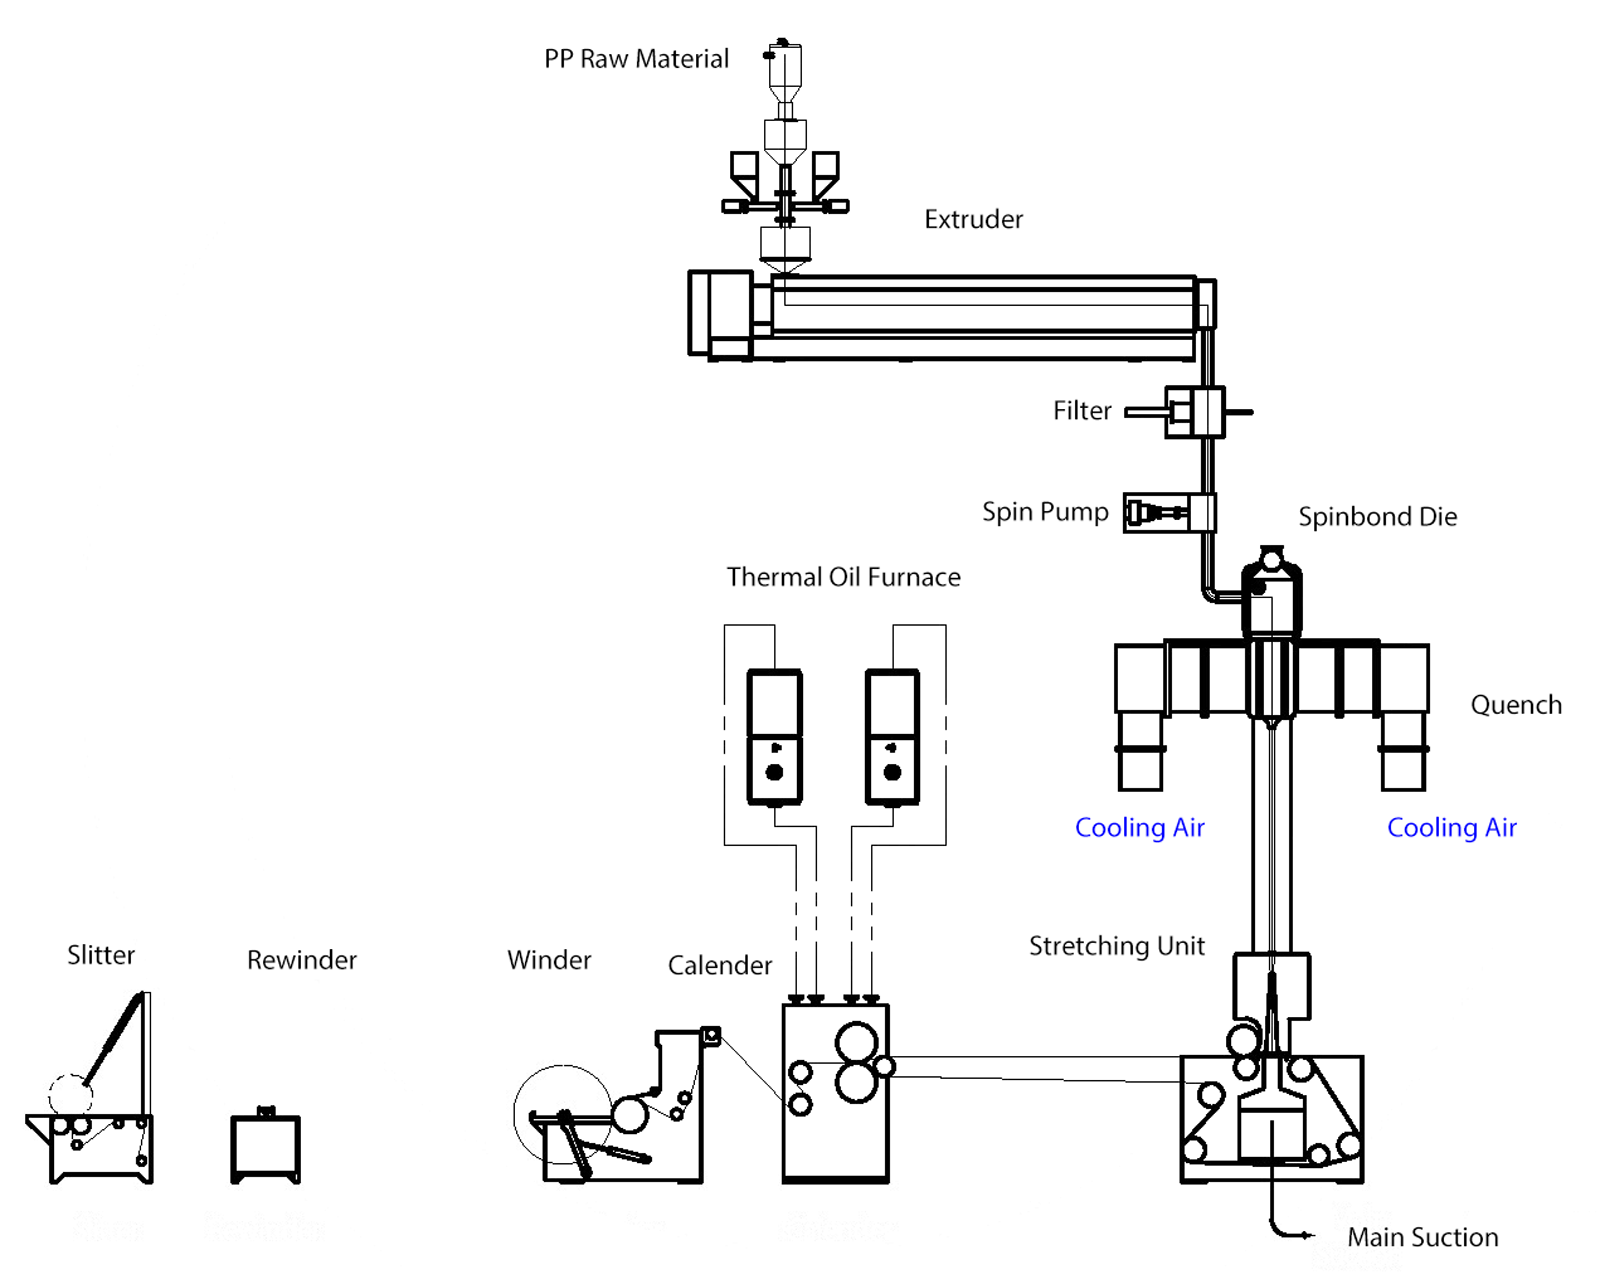 Single Beam Spunbond Line Process Flow Diagram